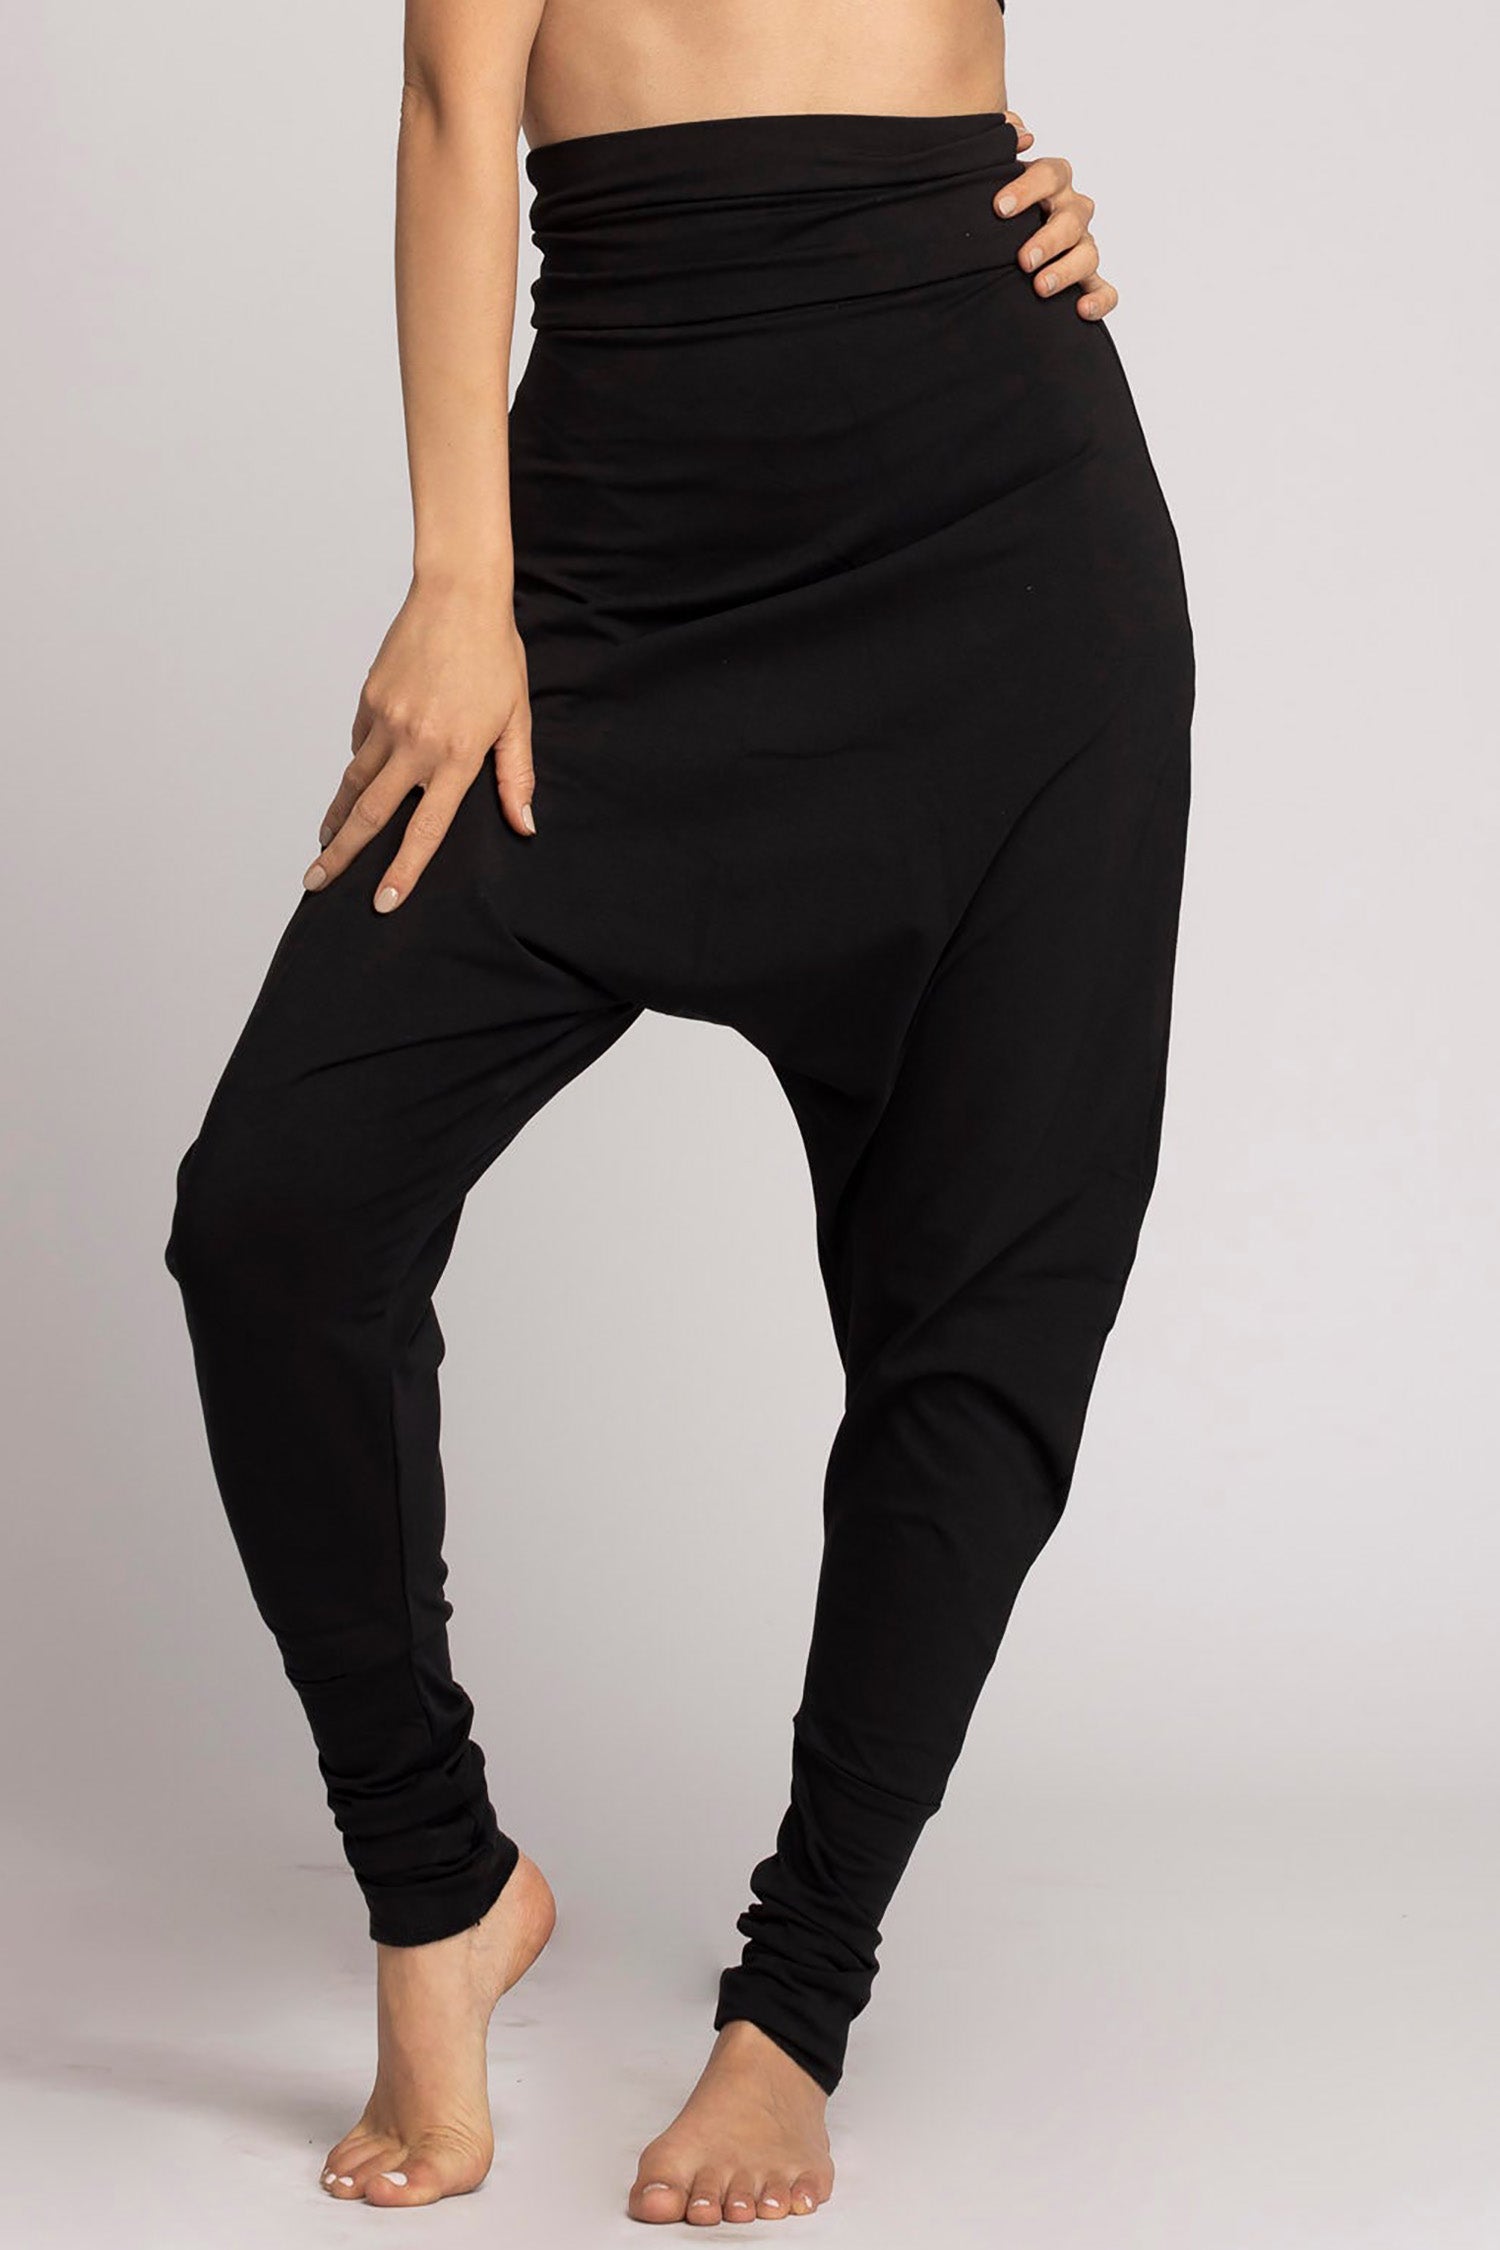 Royal Kurta Womens Cotton Free Size Loose Harem Pants (Black) : Amazon.in:  Fashion